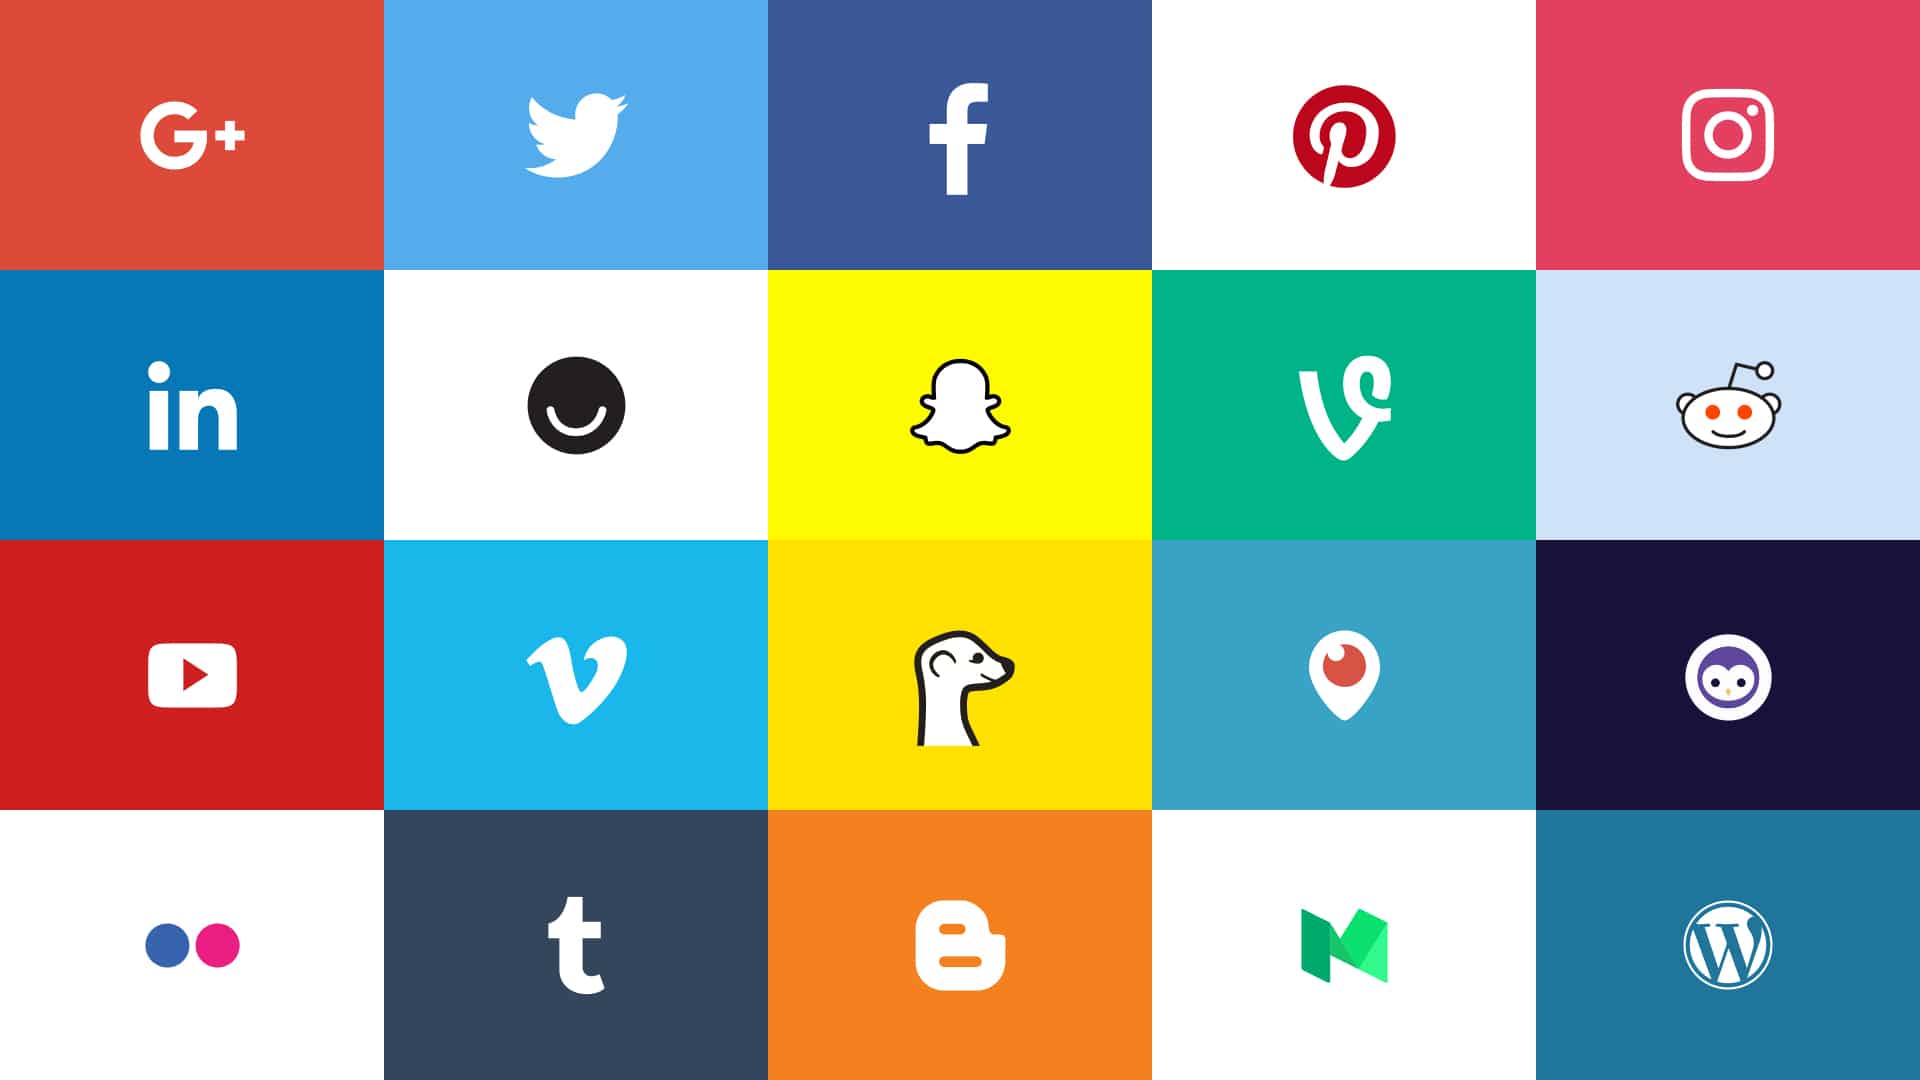 social-media-logos-feature-1920x1080.jpg